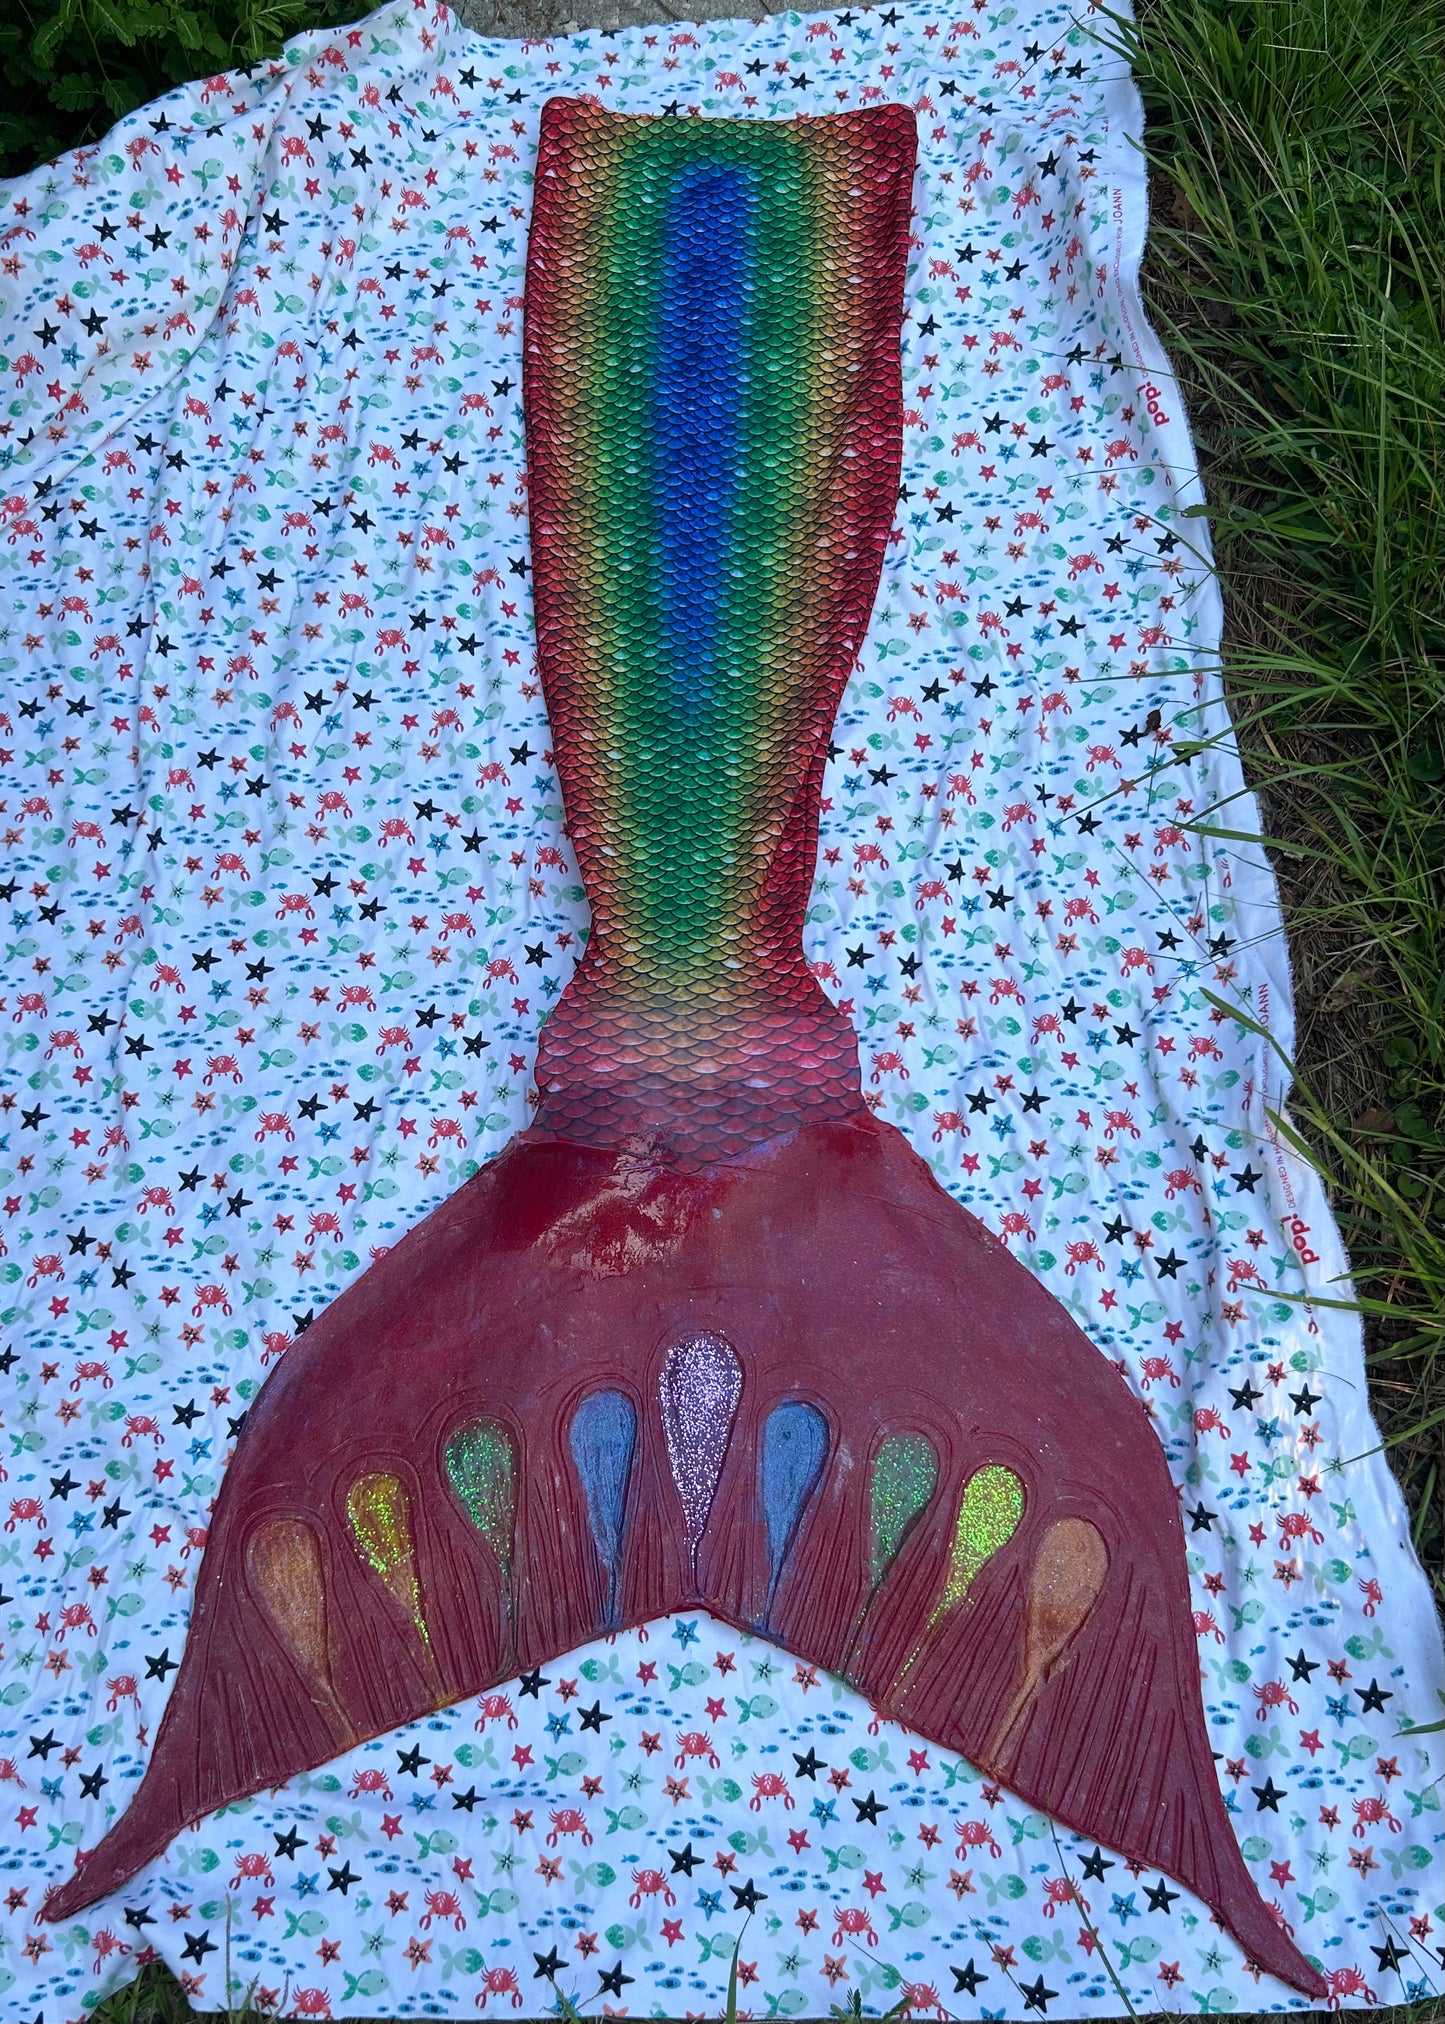 Rainbow Mermaid Tail hybrid tail ready to ship!